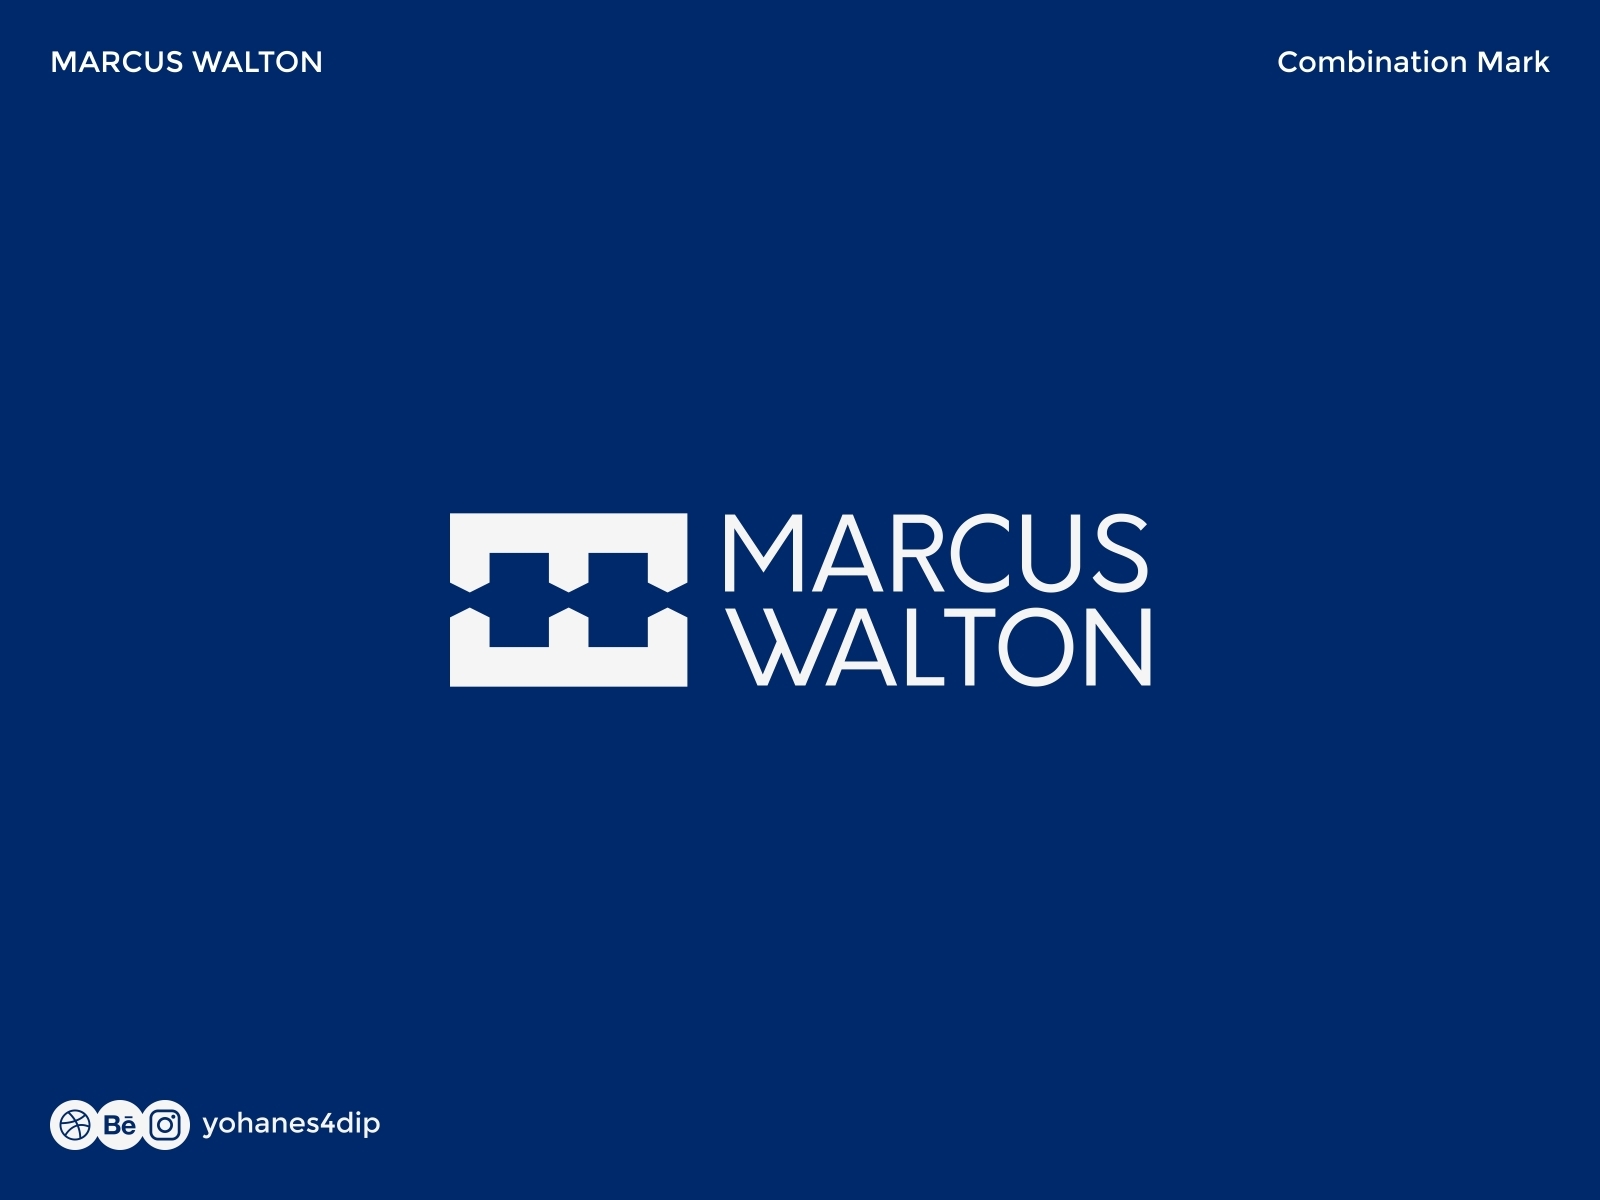 Marcus Walton Logo By Yohanes Adi Prayogo On Dribbble